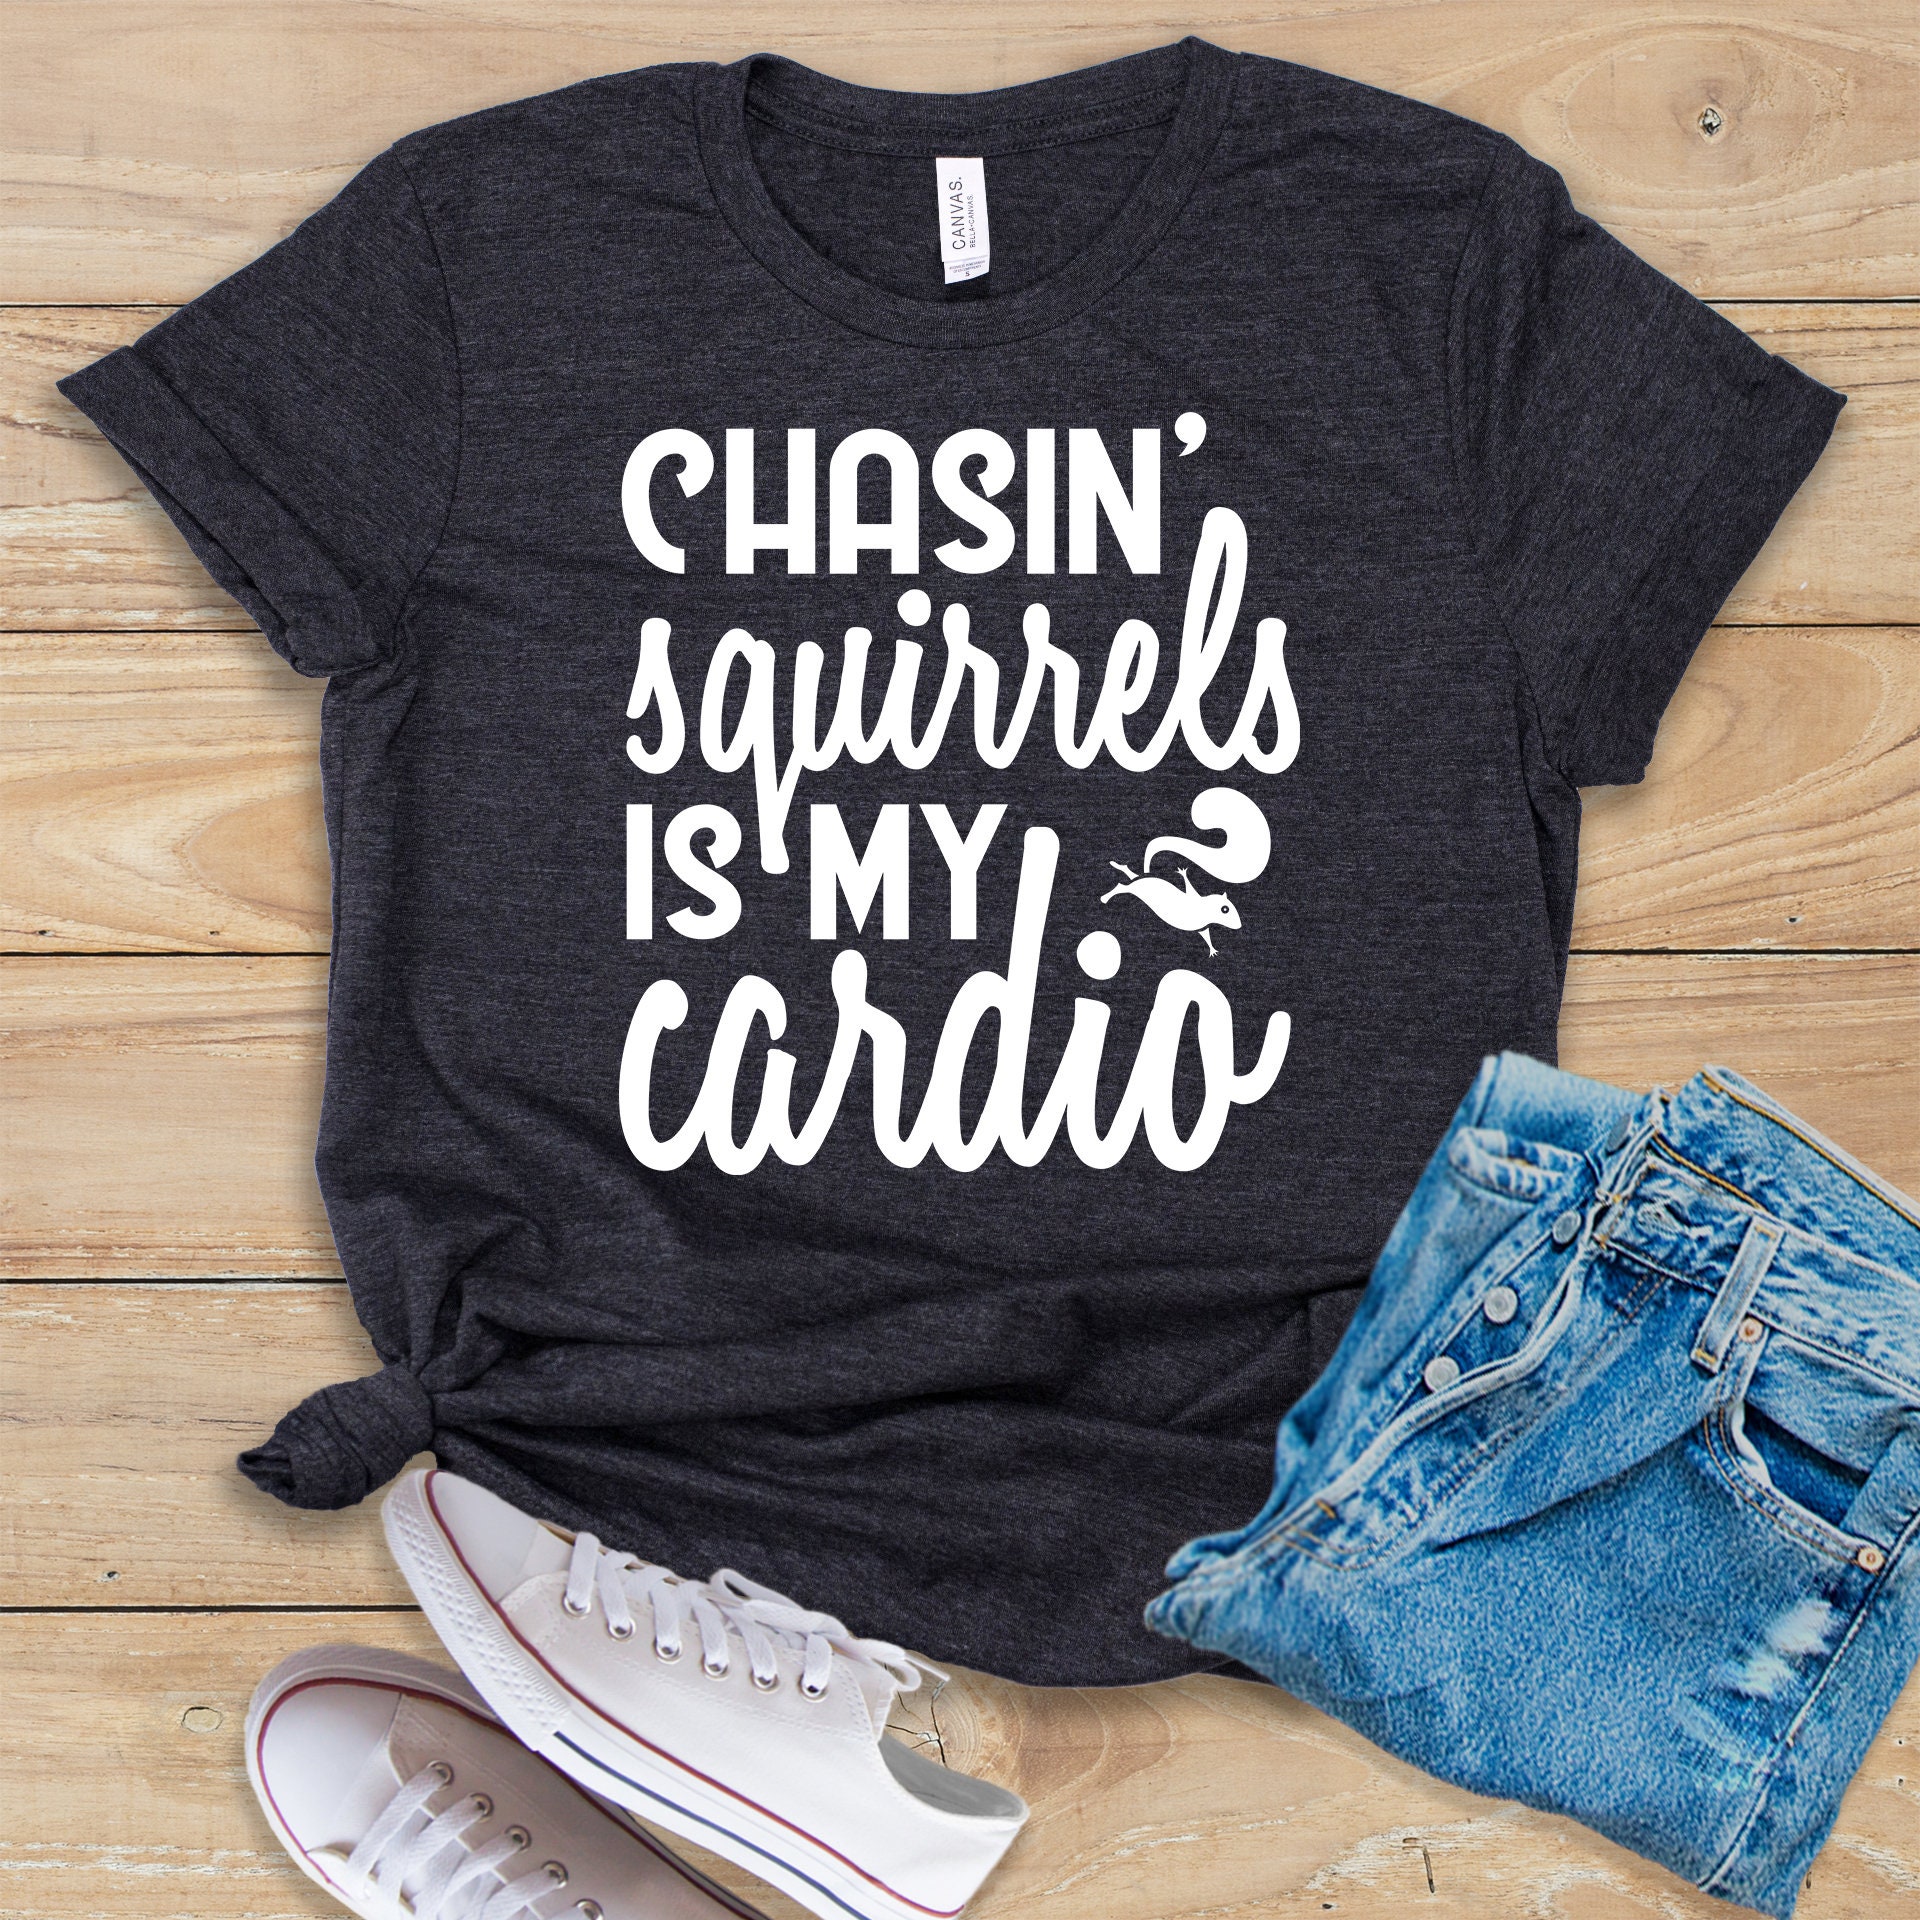 belediging Besmettelijke ziekte september Chasin' Squirrels is My Cardio Shirt Tank Top Hoodie - Etsy